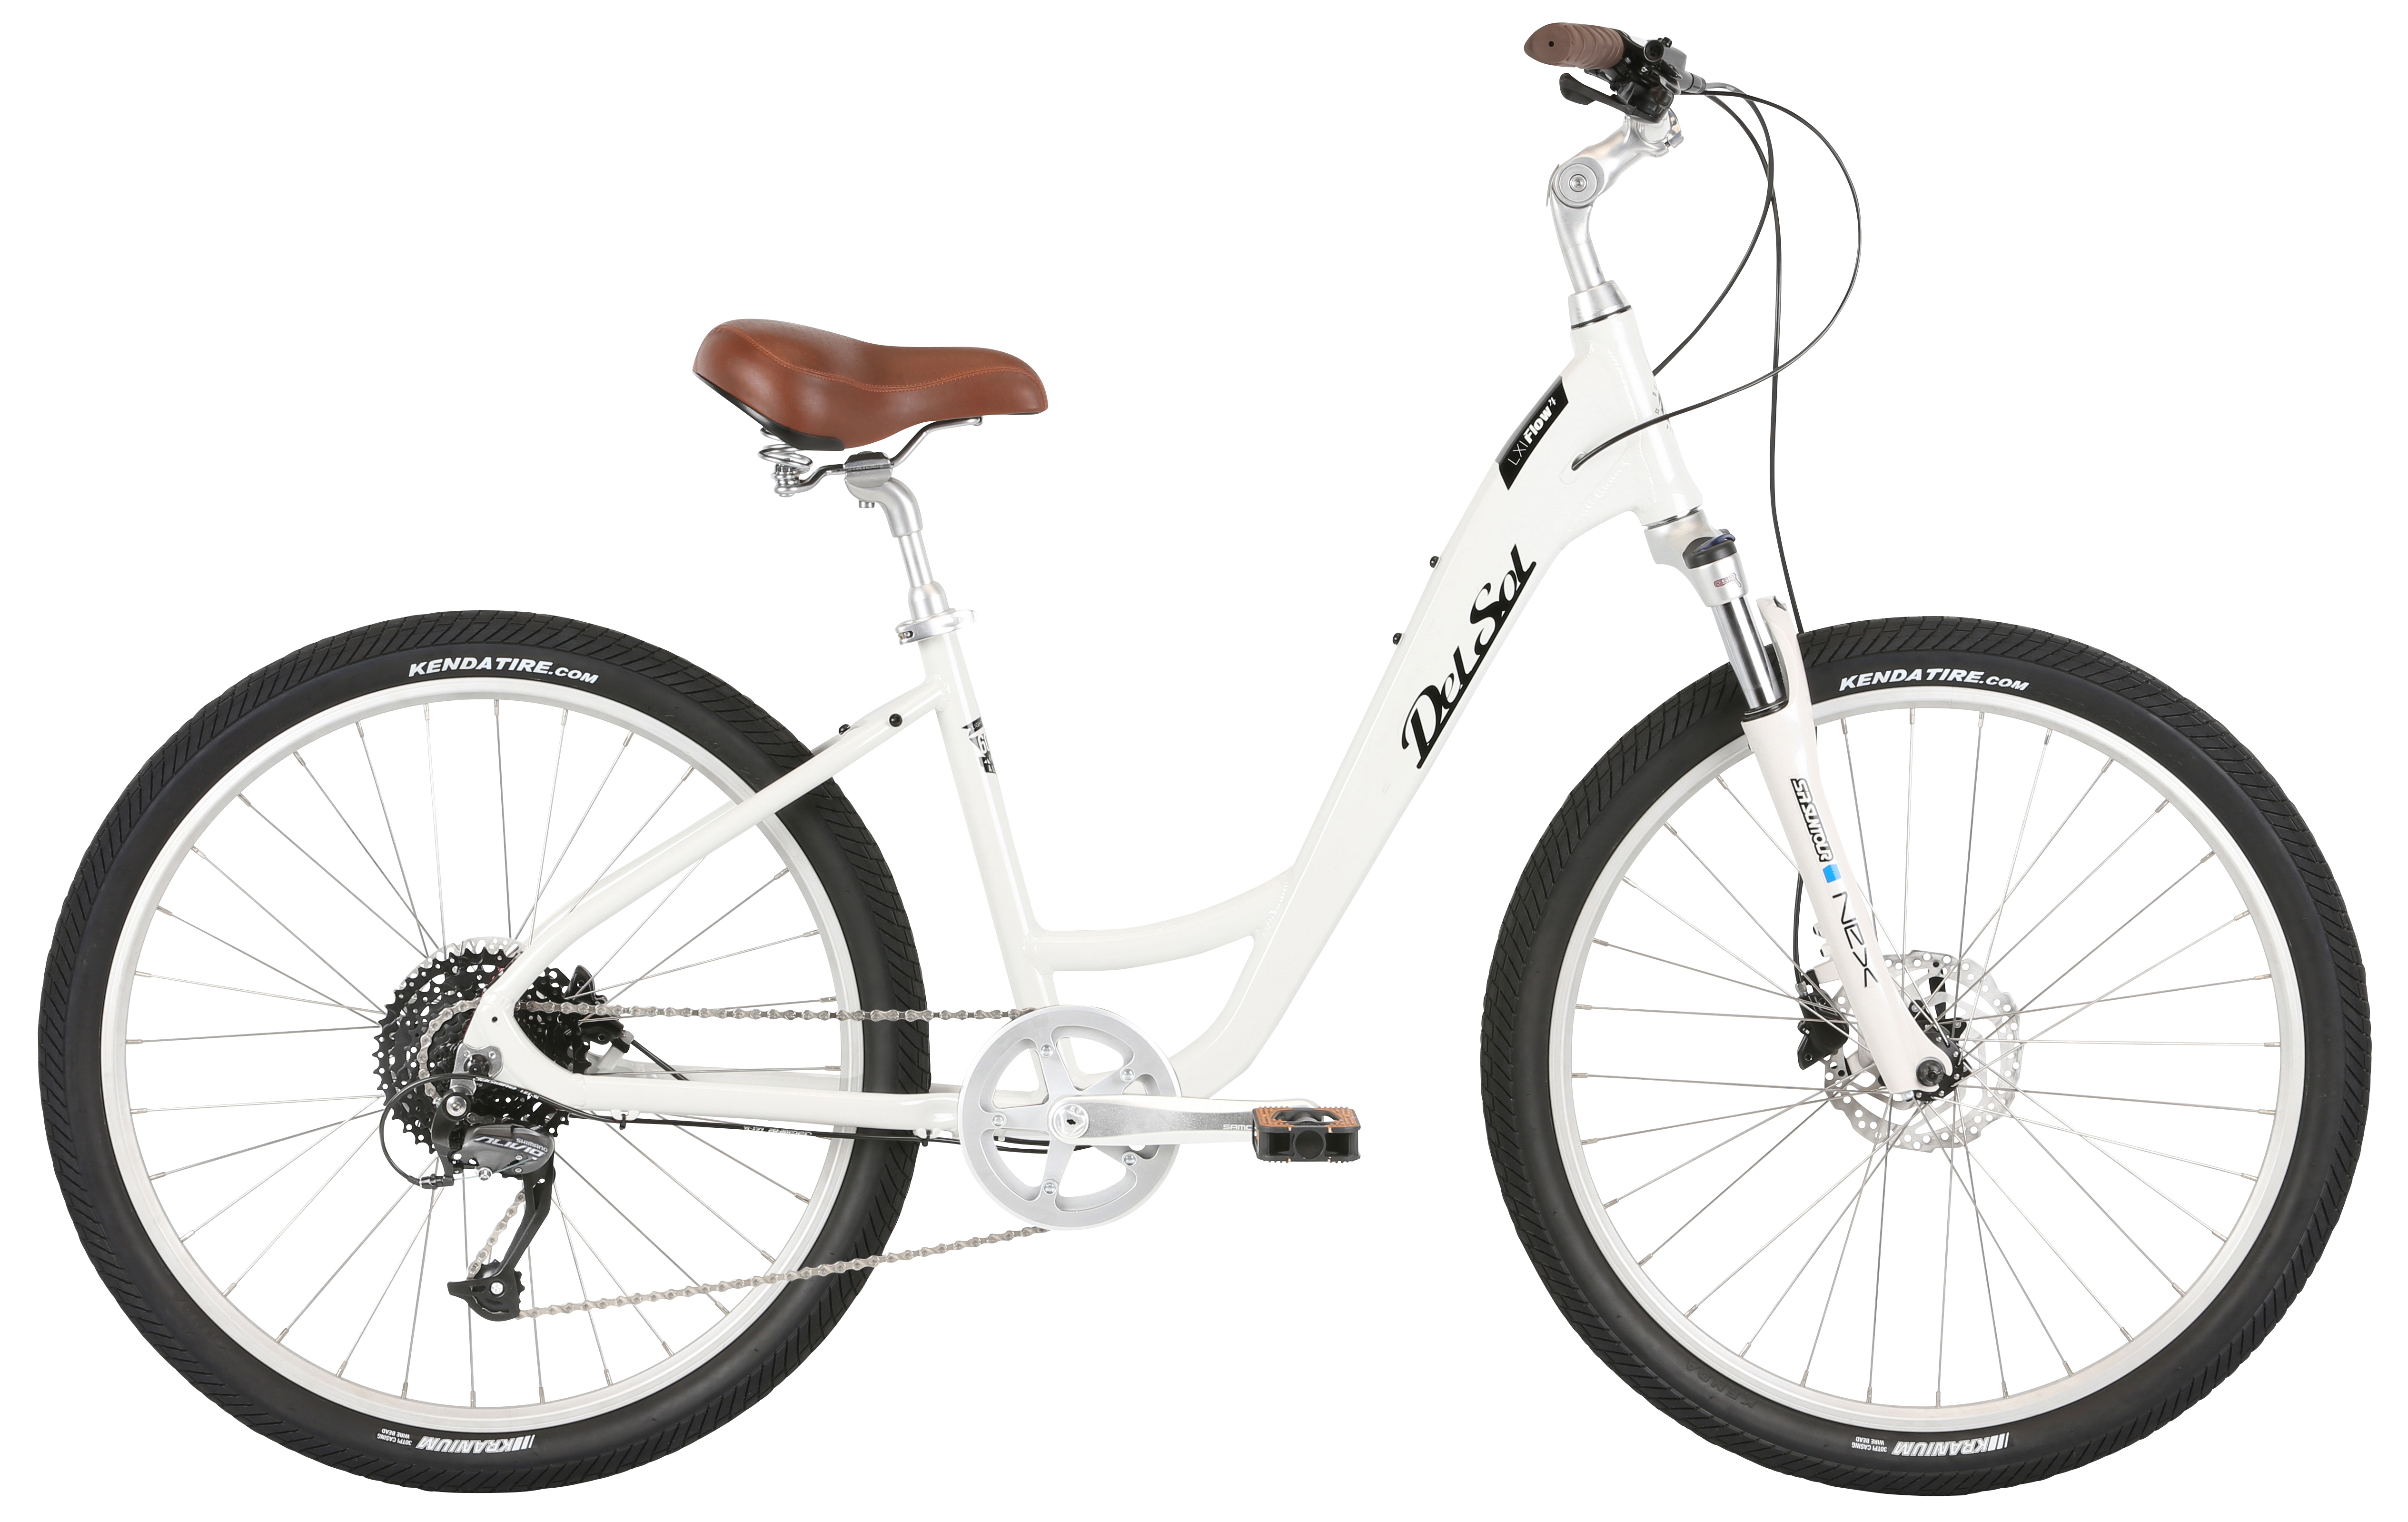  Отзывы о Женском велосипеде Haro Lxi Flow 4 ST 27.5 2019